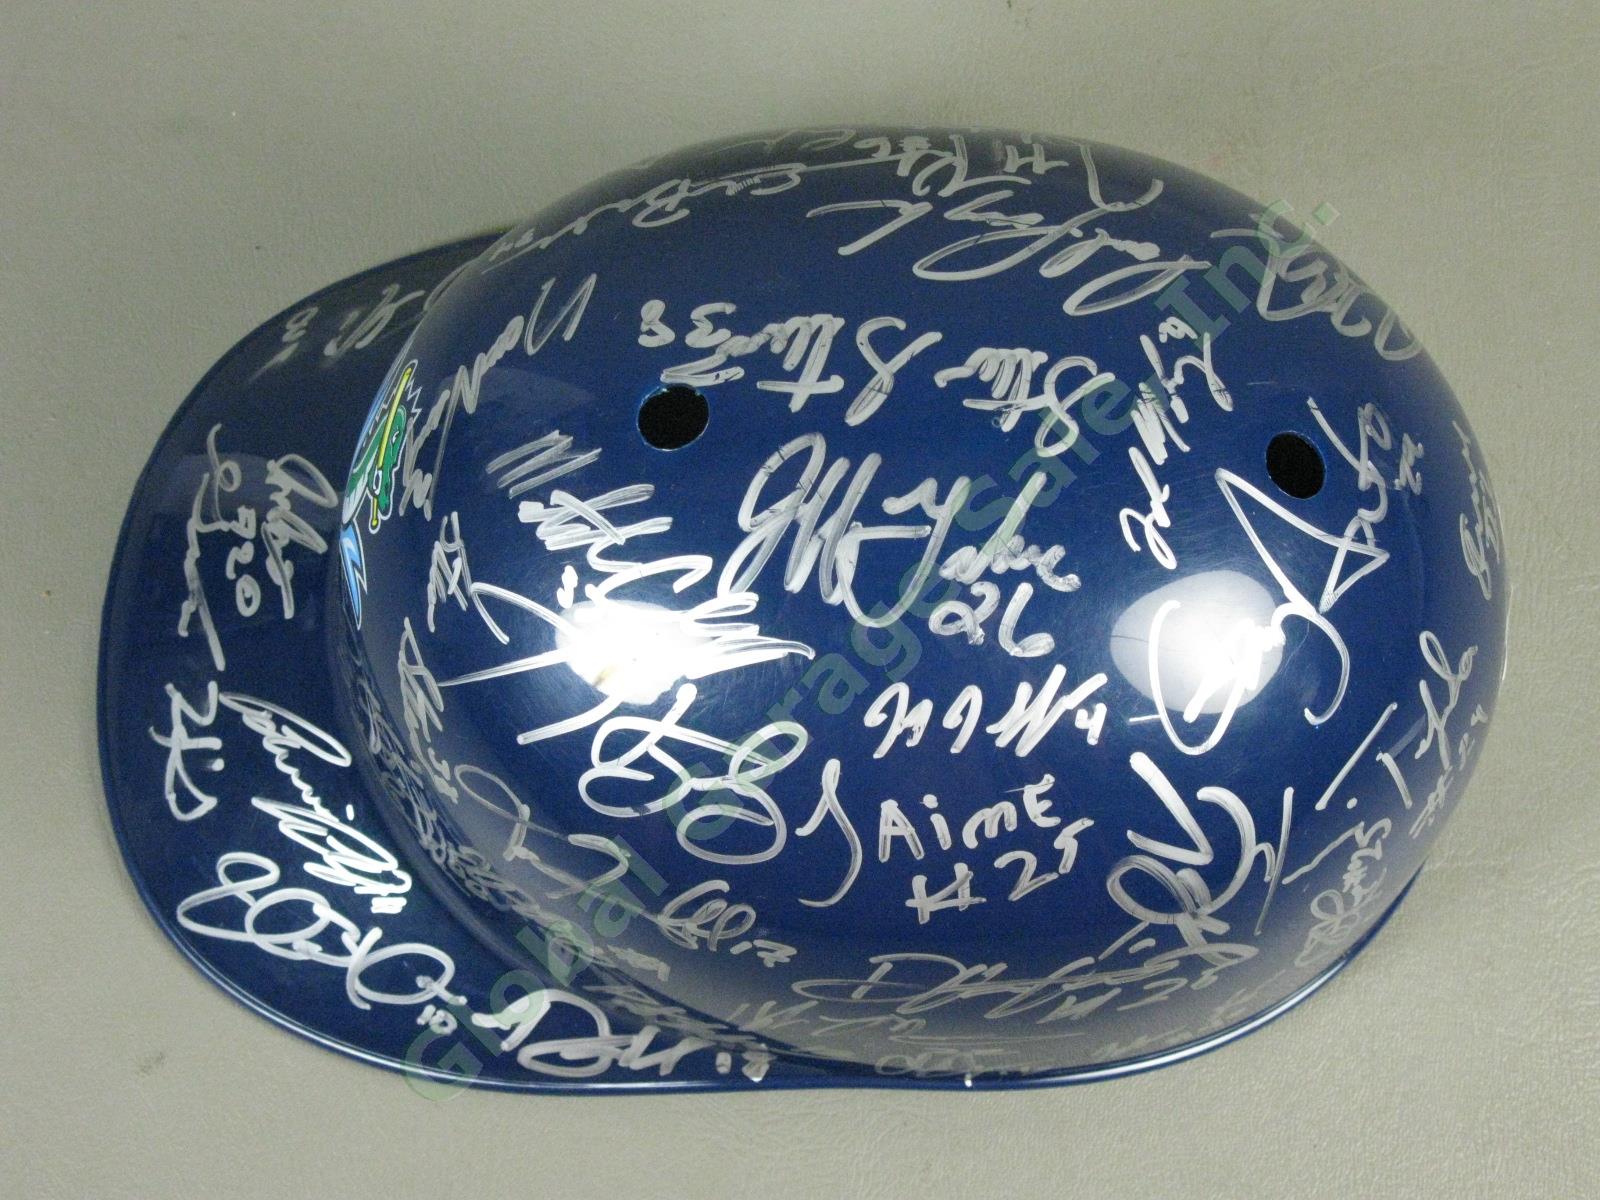 2009 Vermont Lake Monsters Team Signed Baseball Helmet NYPL Washington Nationals 4